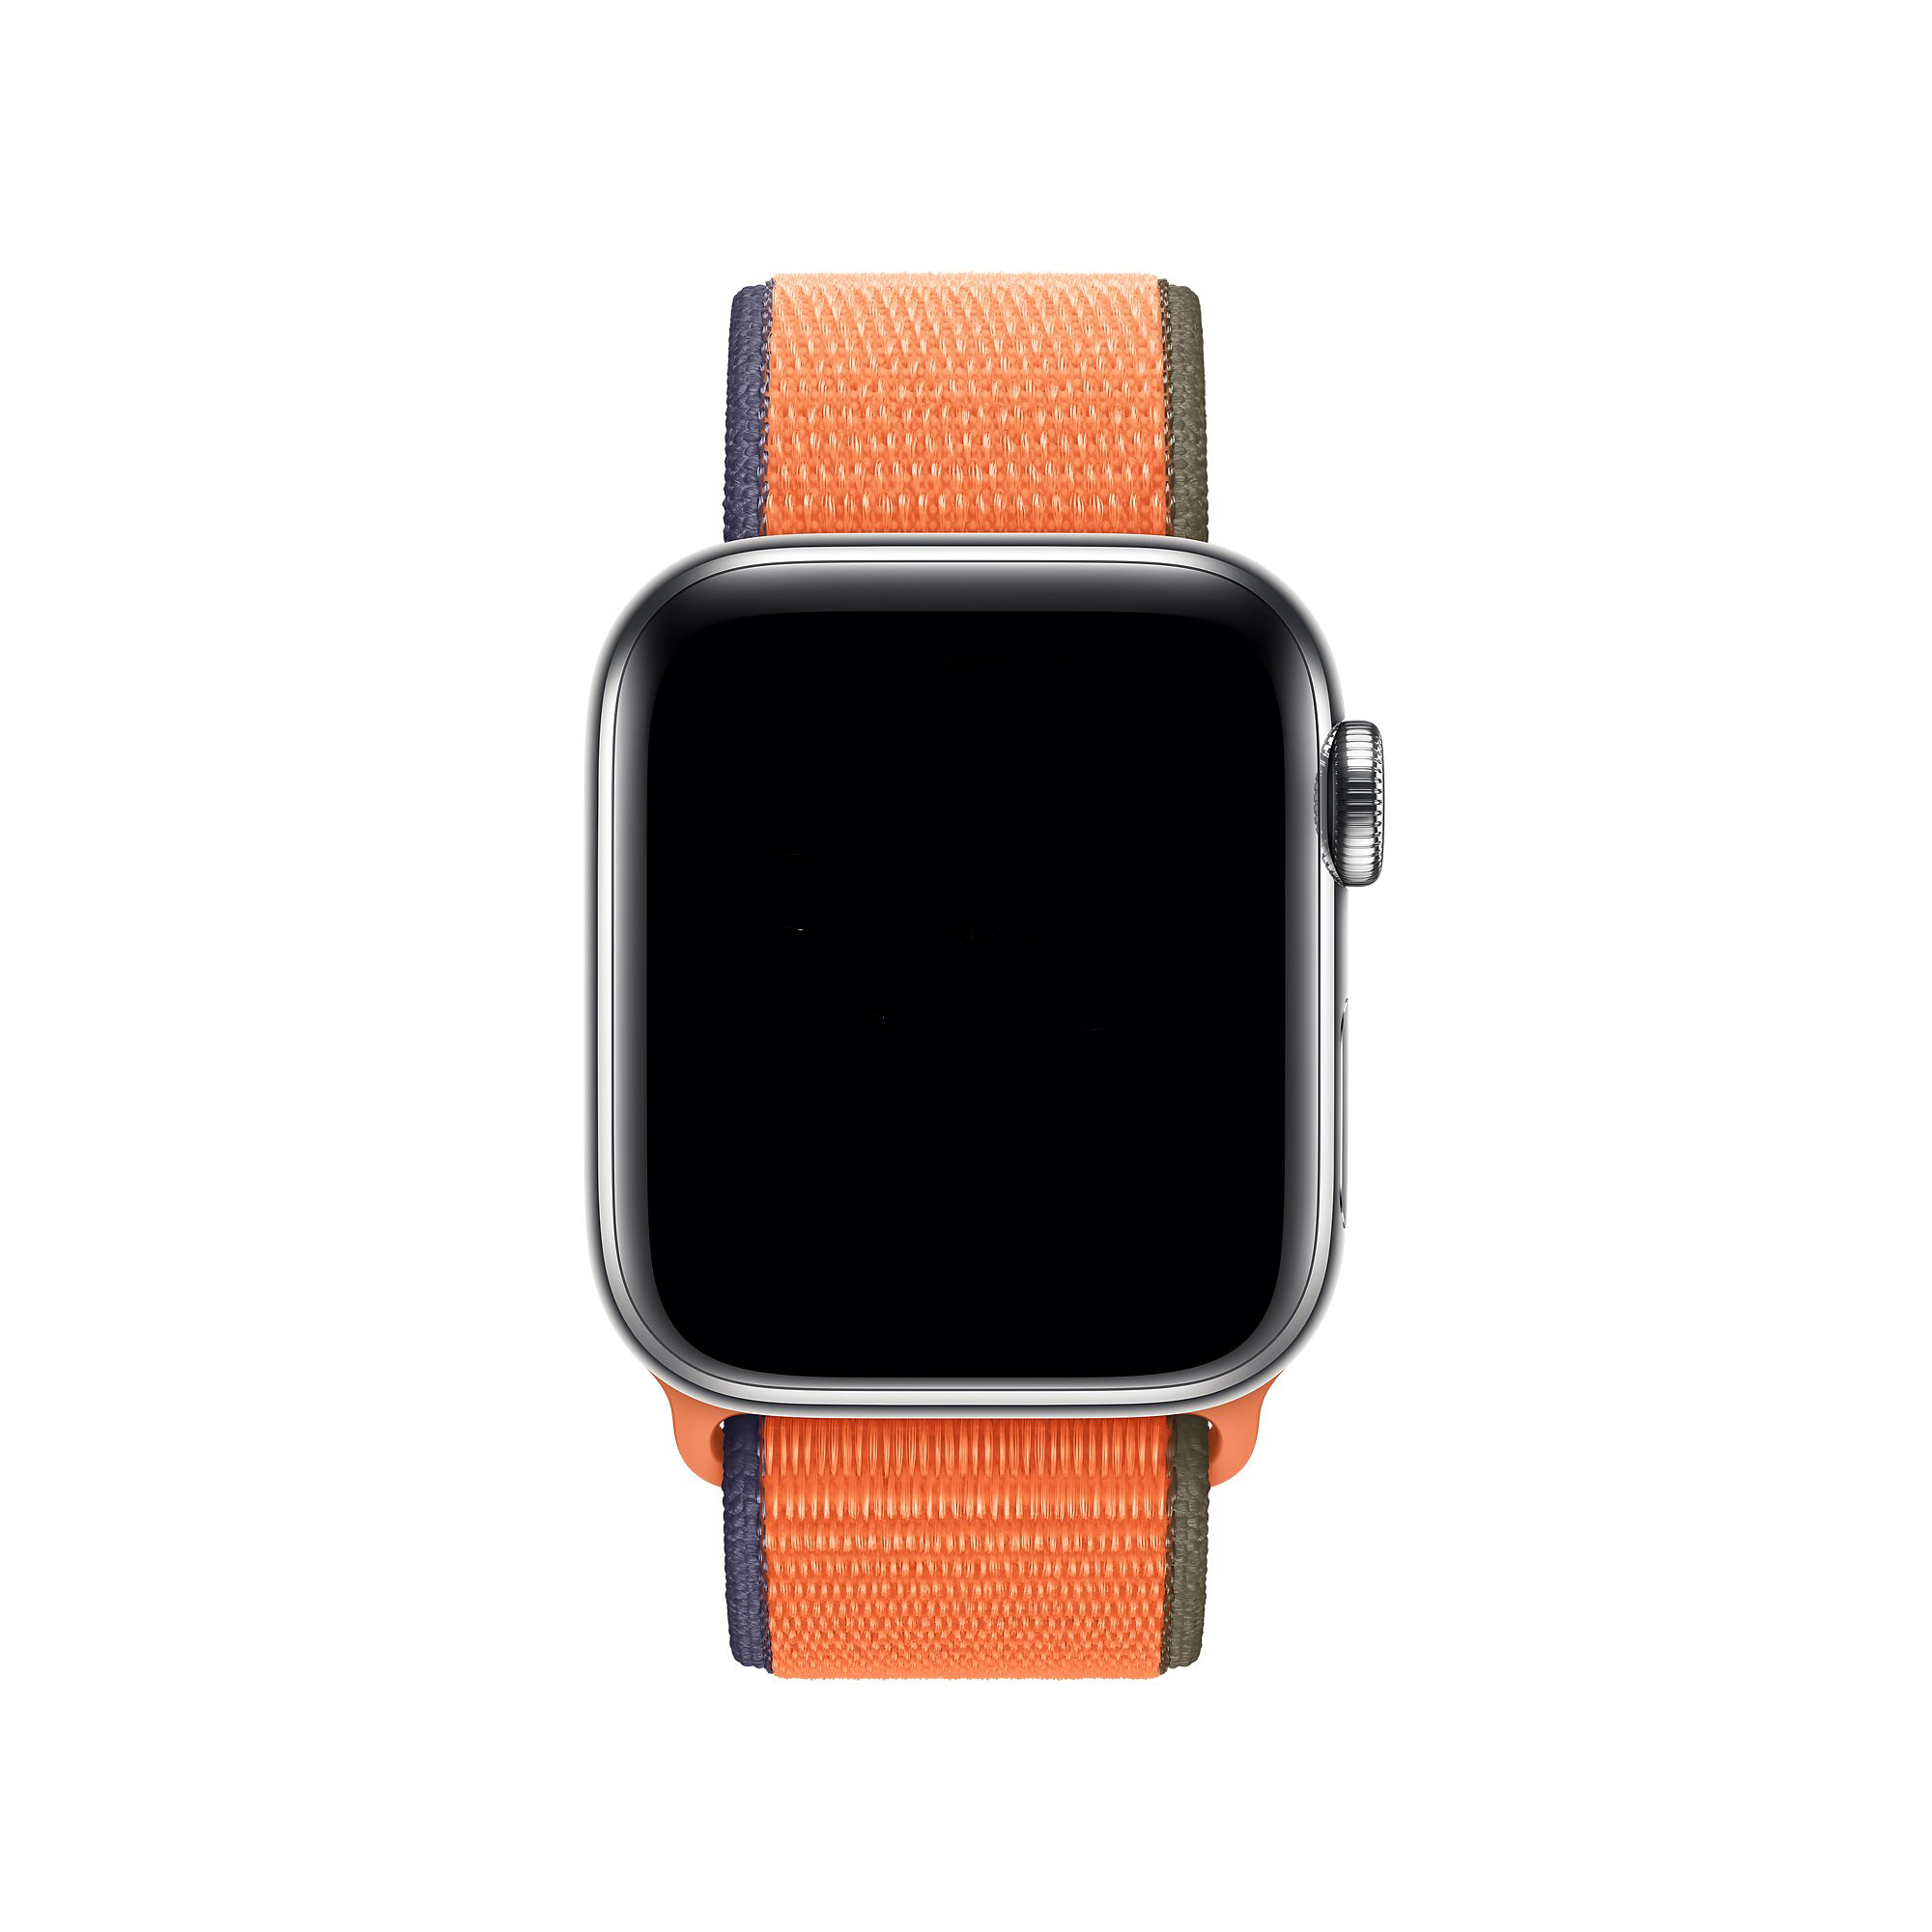 Cinturino nylon sport loop per Apple Watch - kumquat